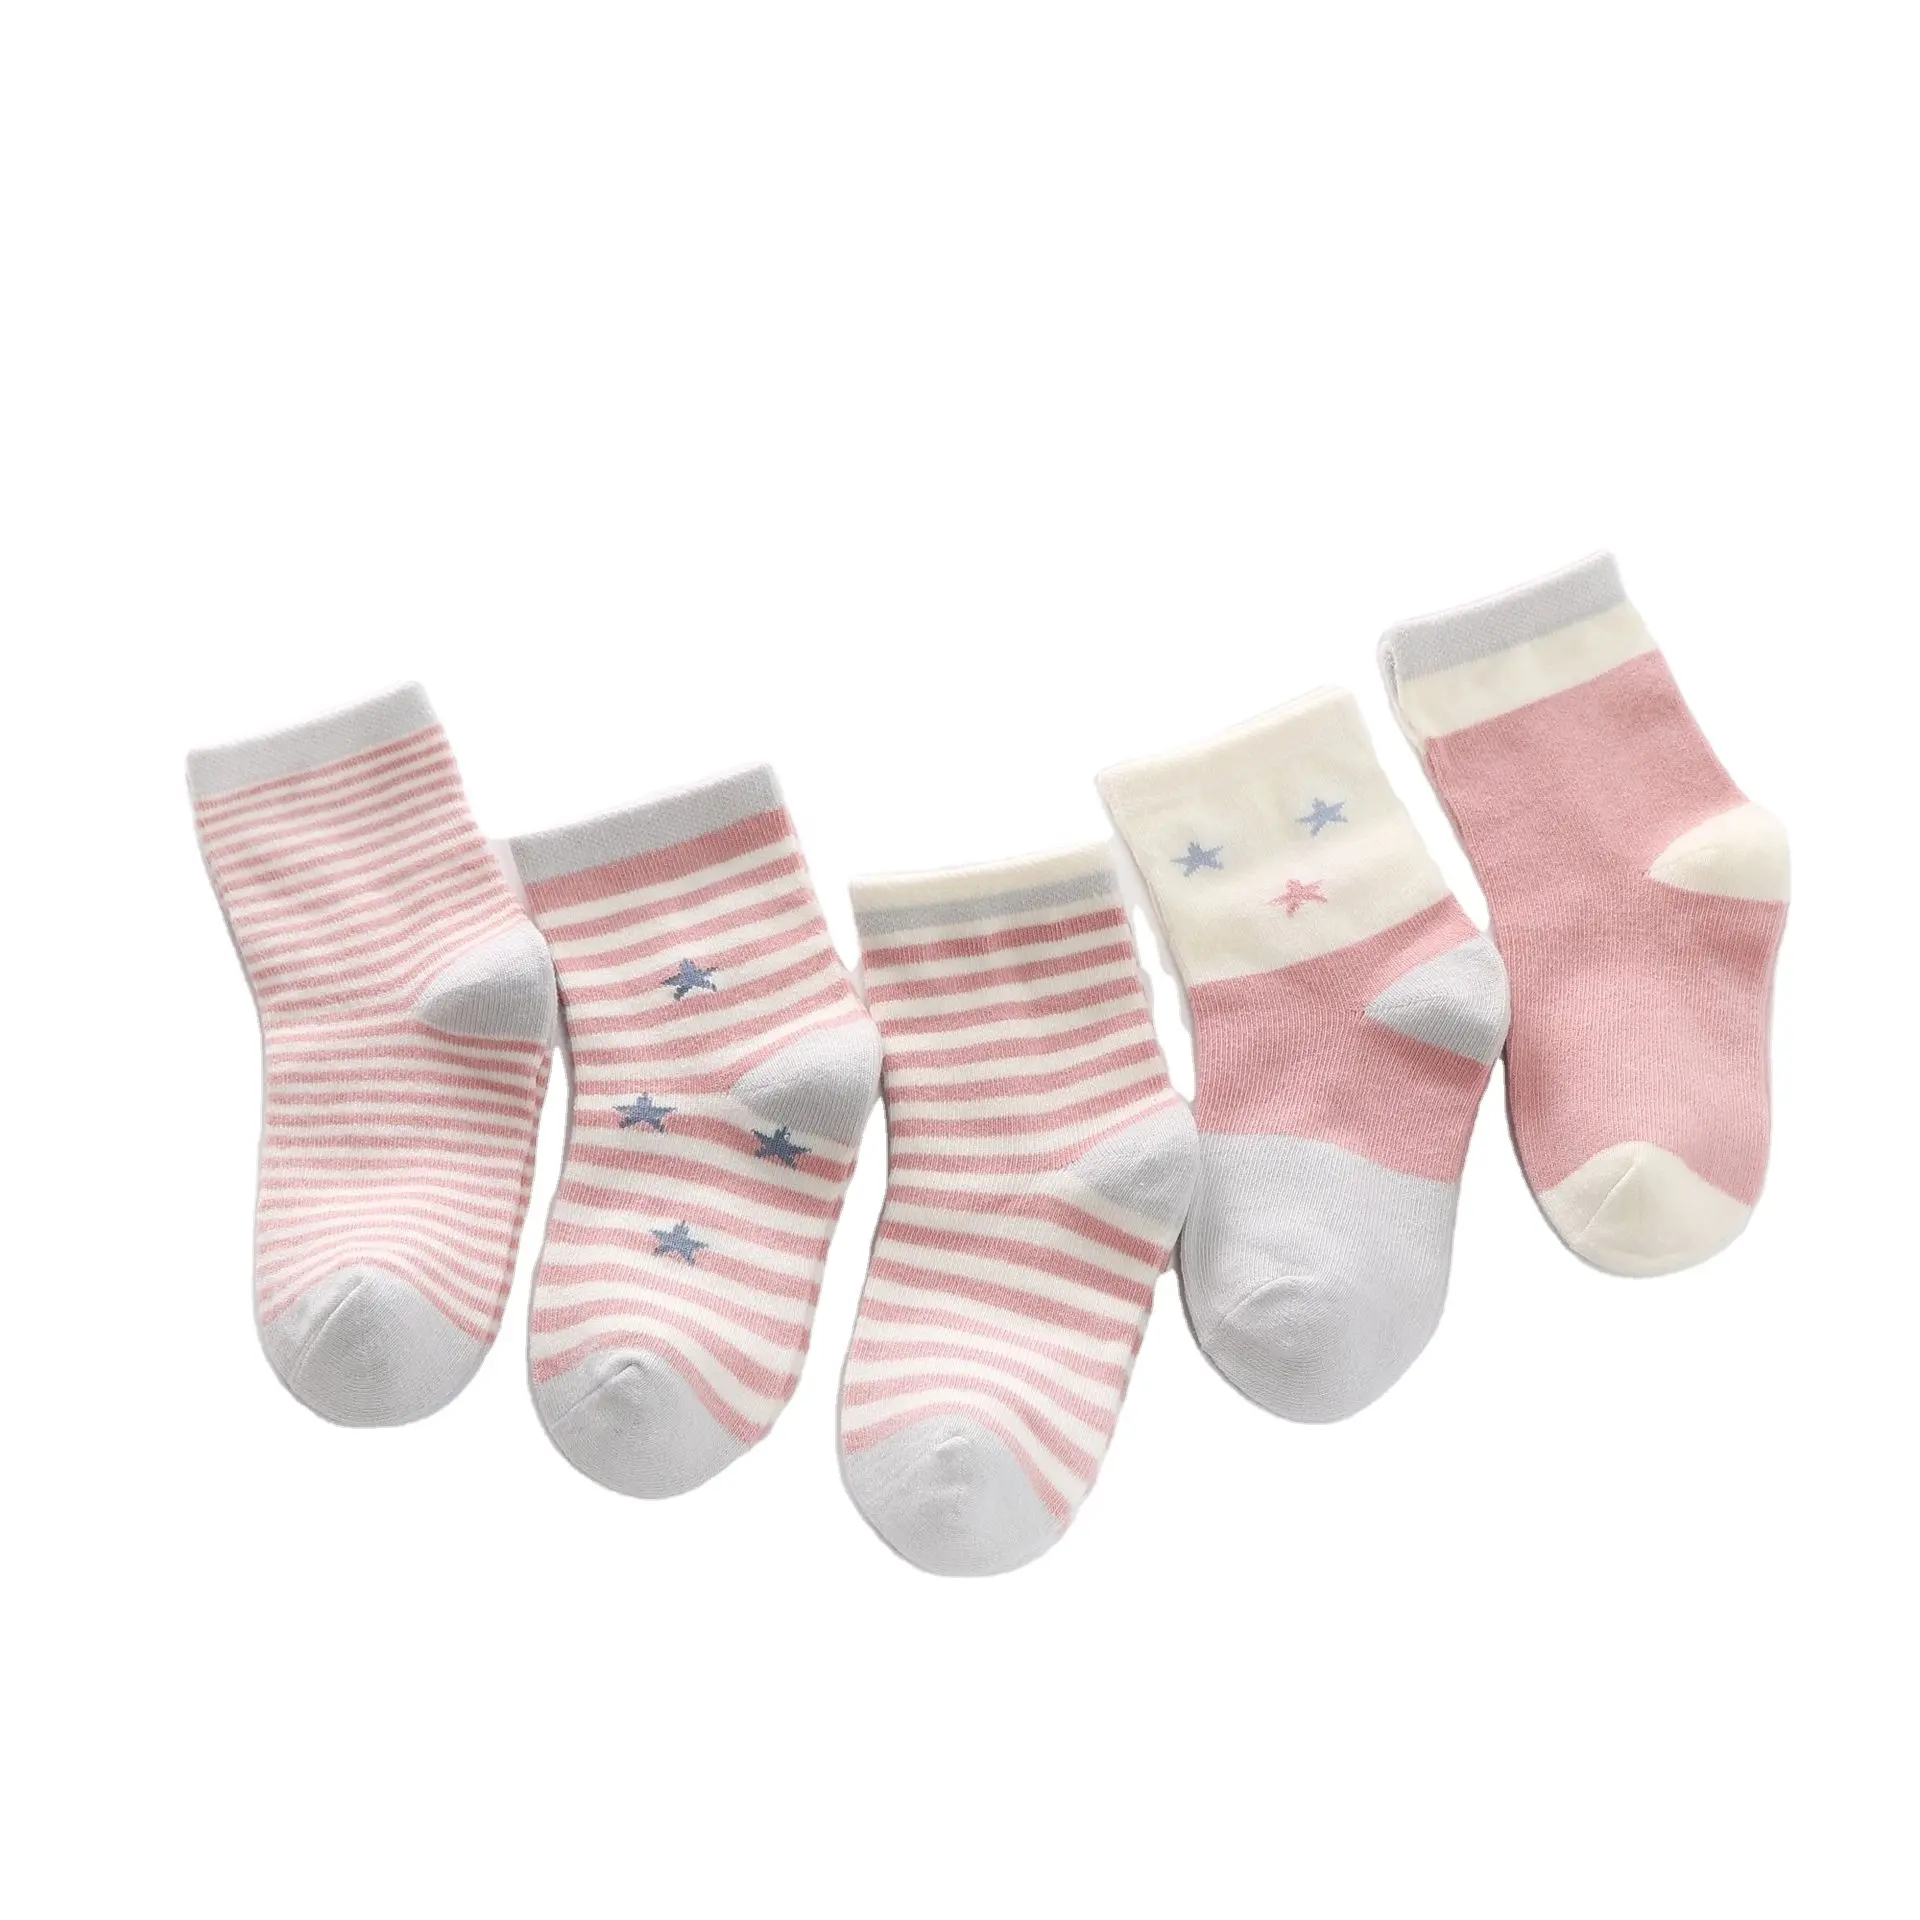 Unisex Baby Ankle Socks Toddler Infant Newborn Kids Boy Girls Cotton Half Cushion Crew Baby Socks